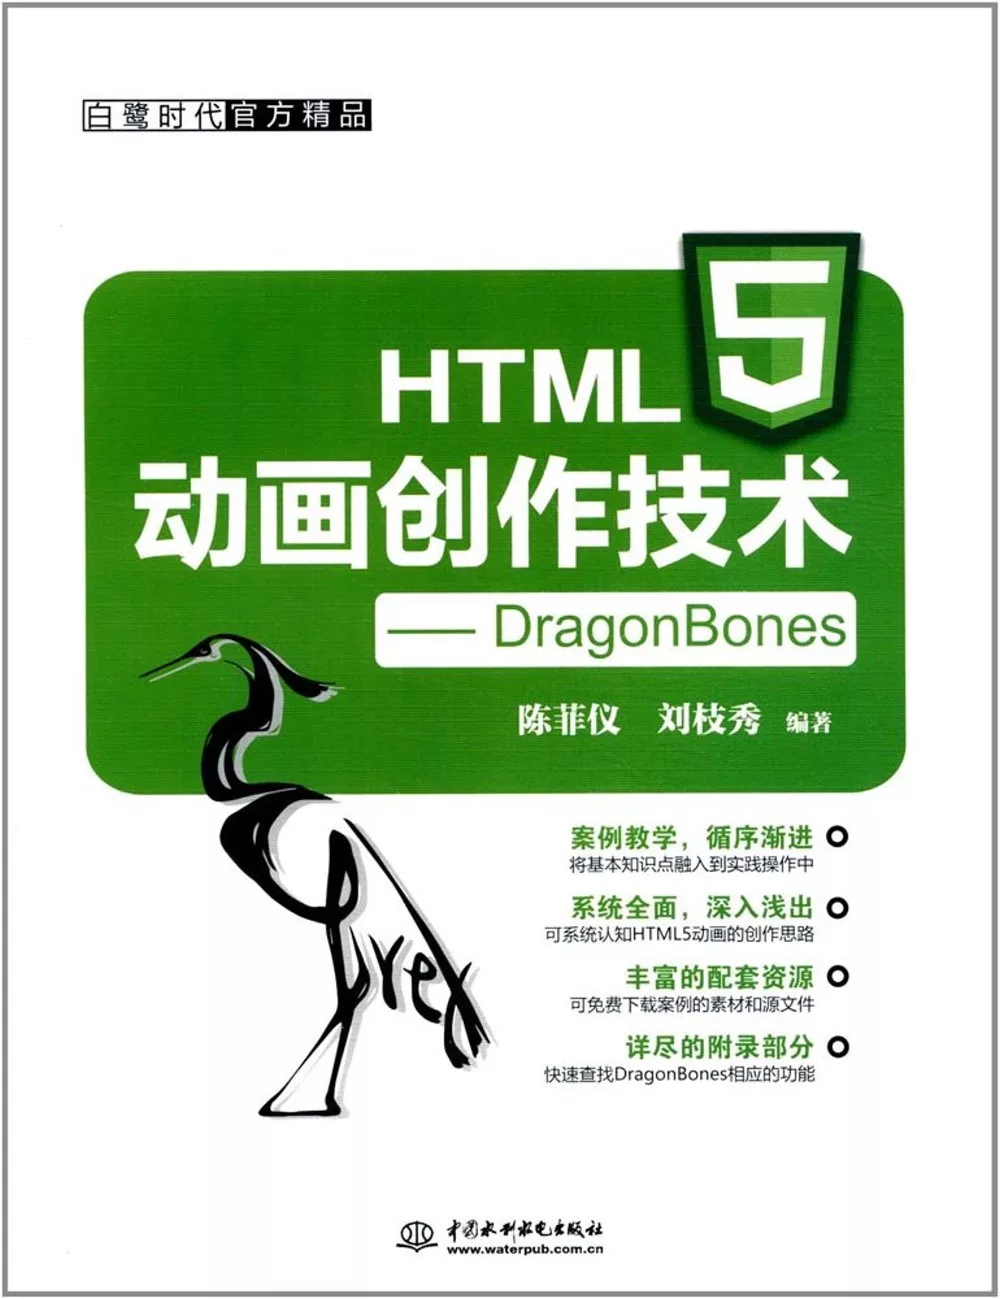 HTML5動畫創作技術：DragonBones